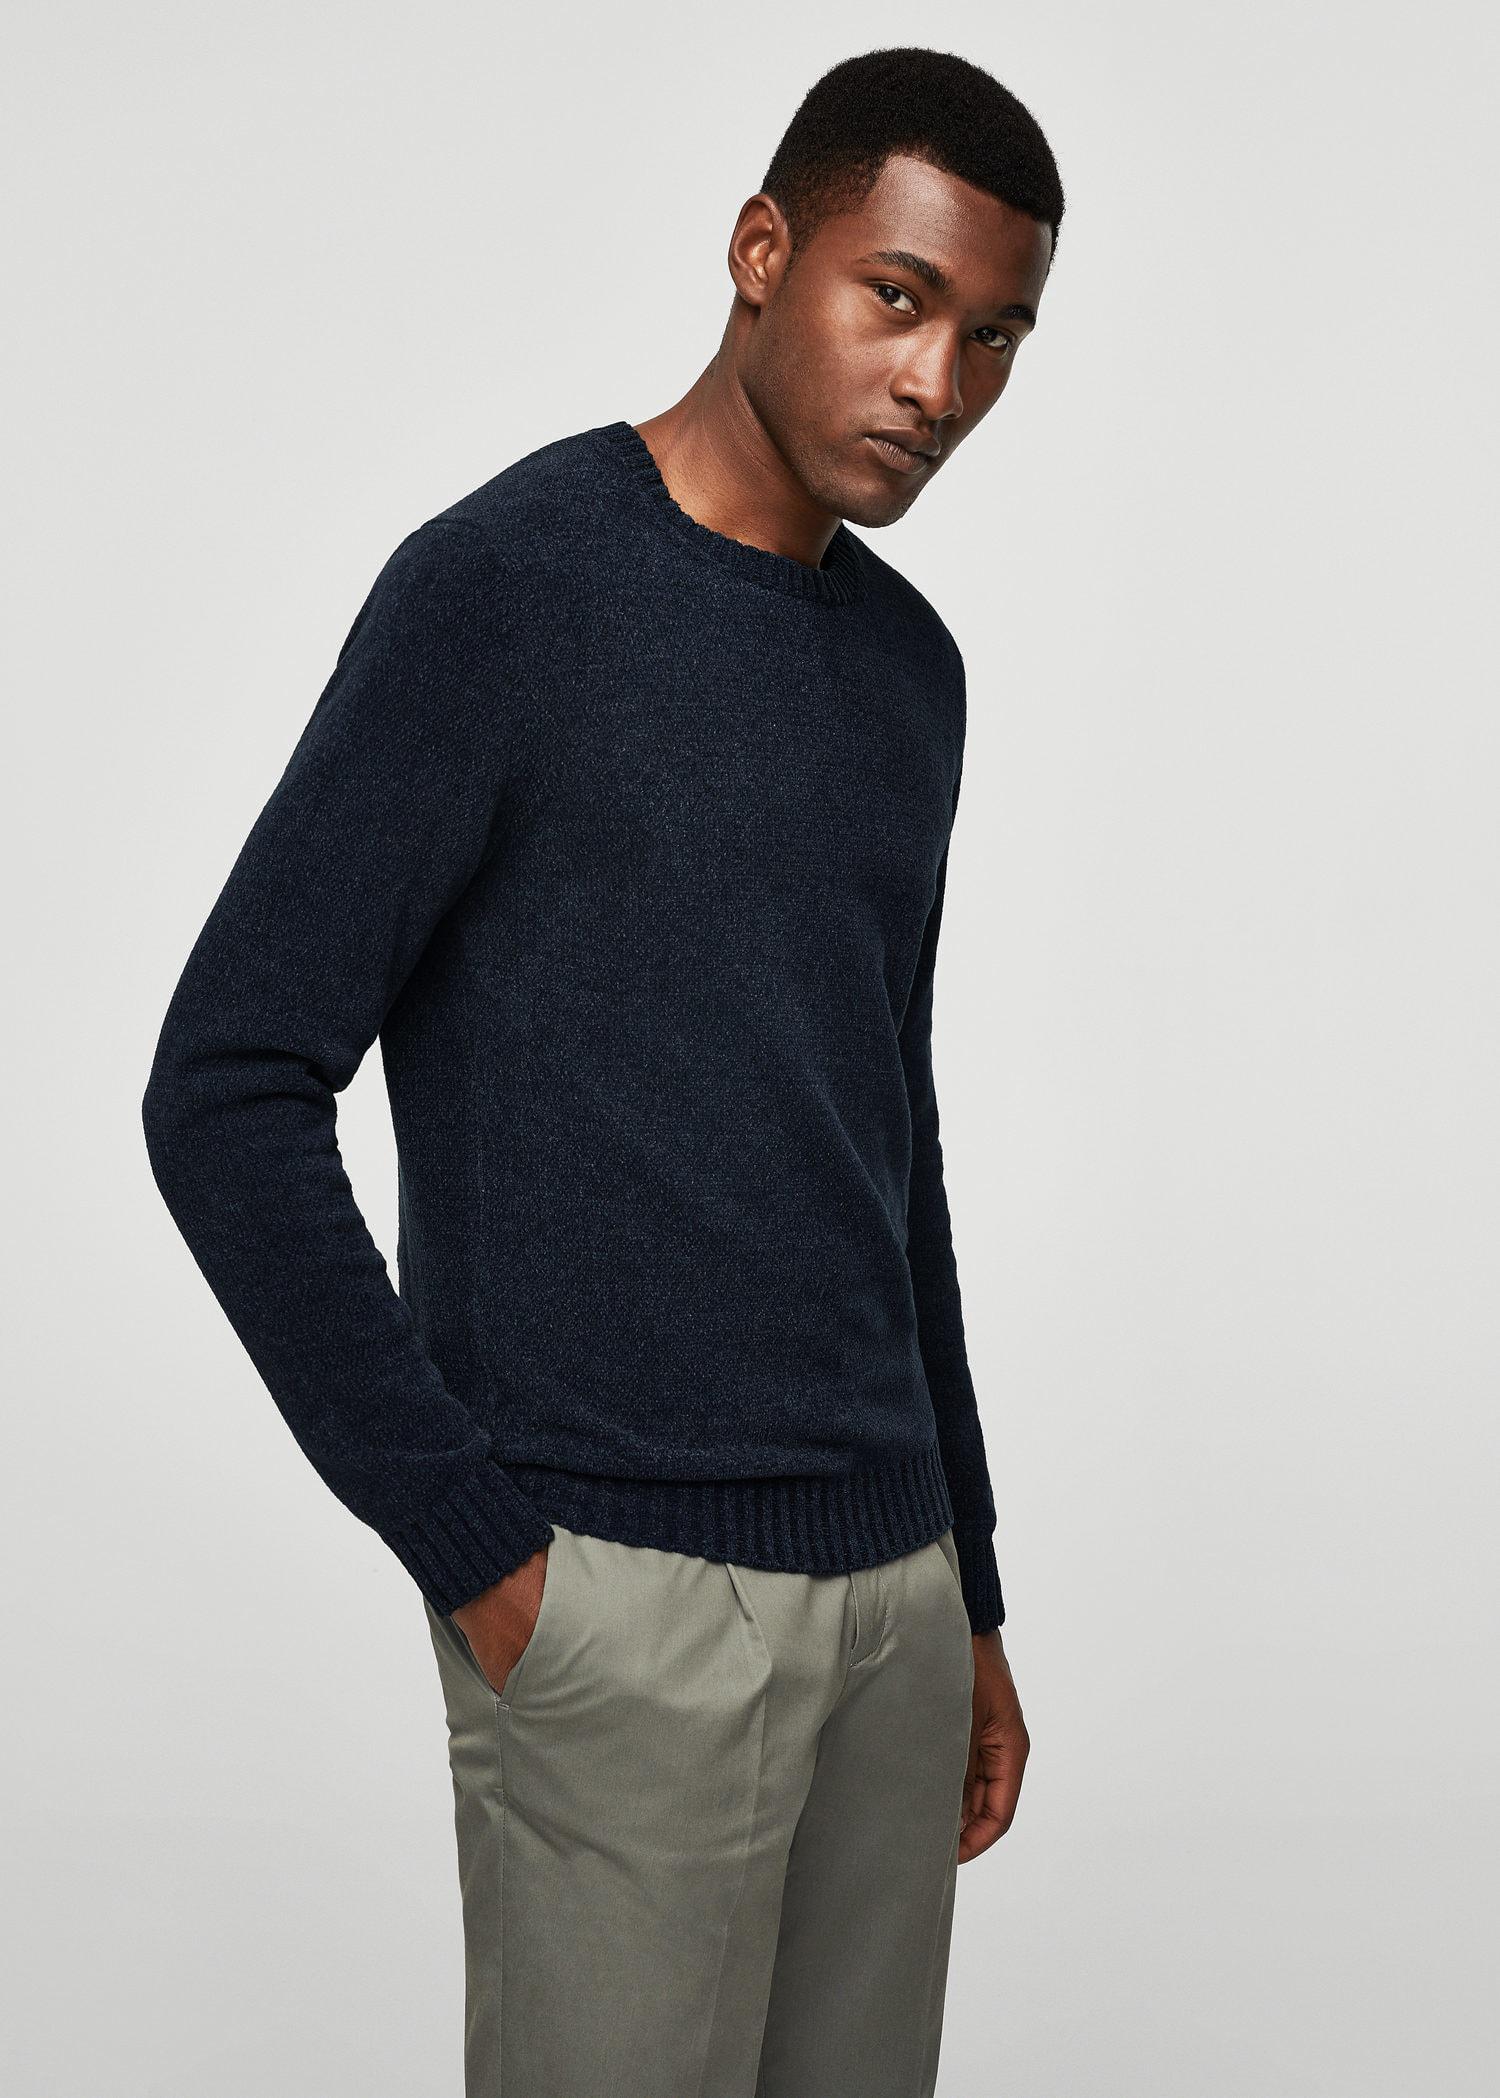 Lyst - Mango Towel Fabric Sweater in Blue for Men